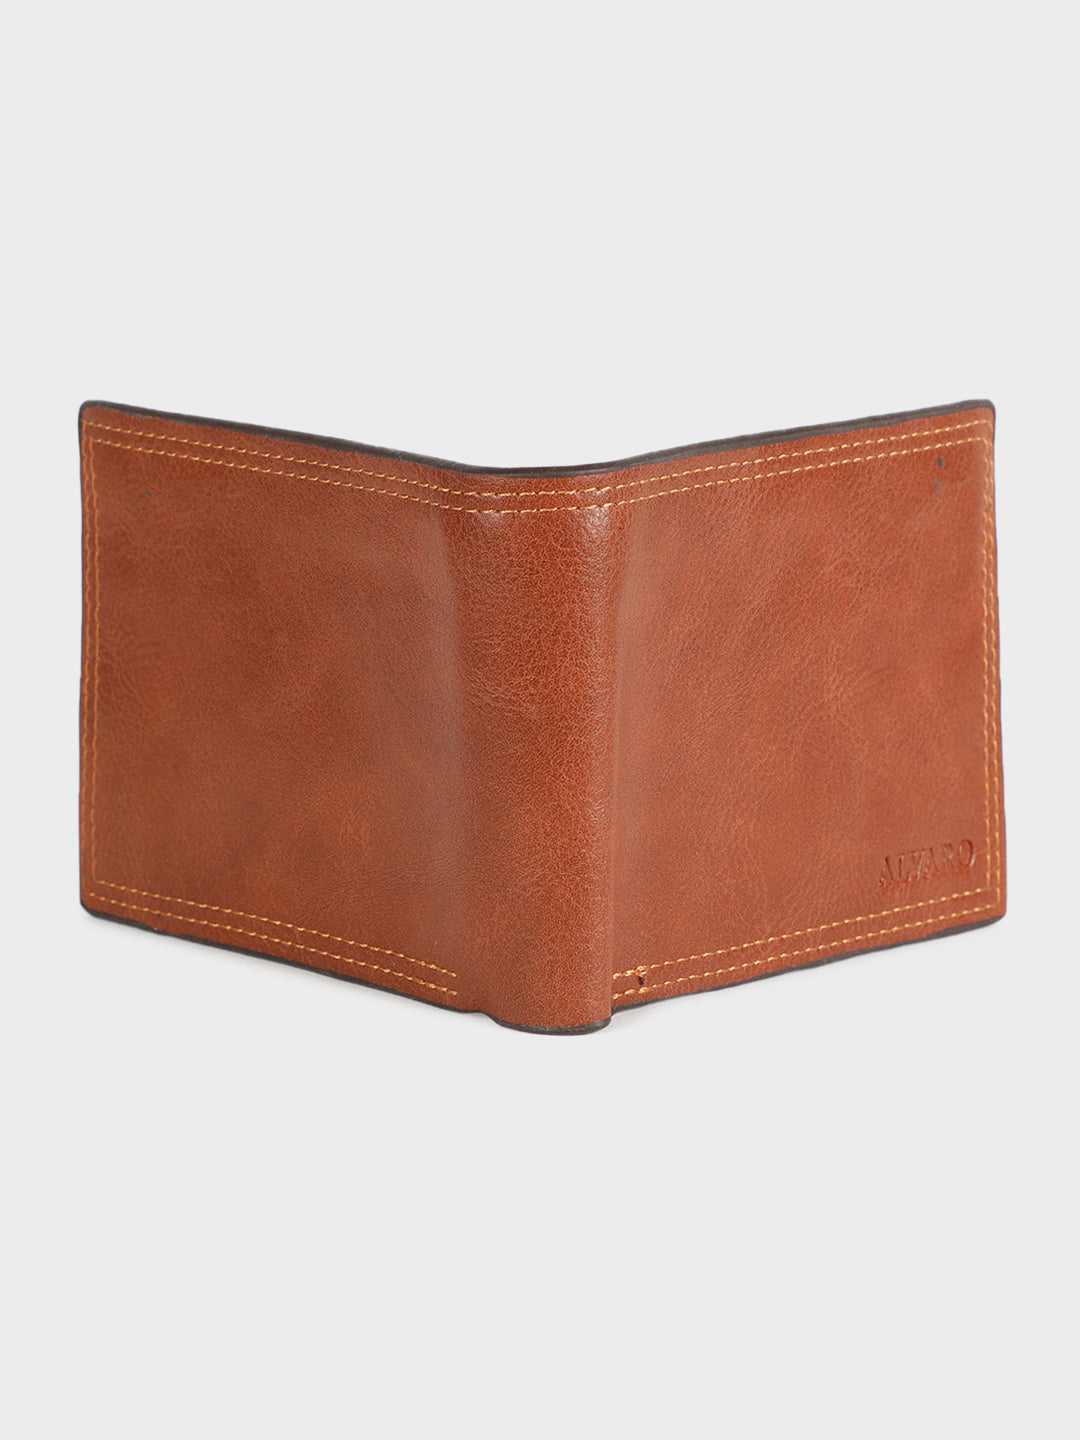 Alvaro Castagnino Men's Orange Color Leather Wallet